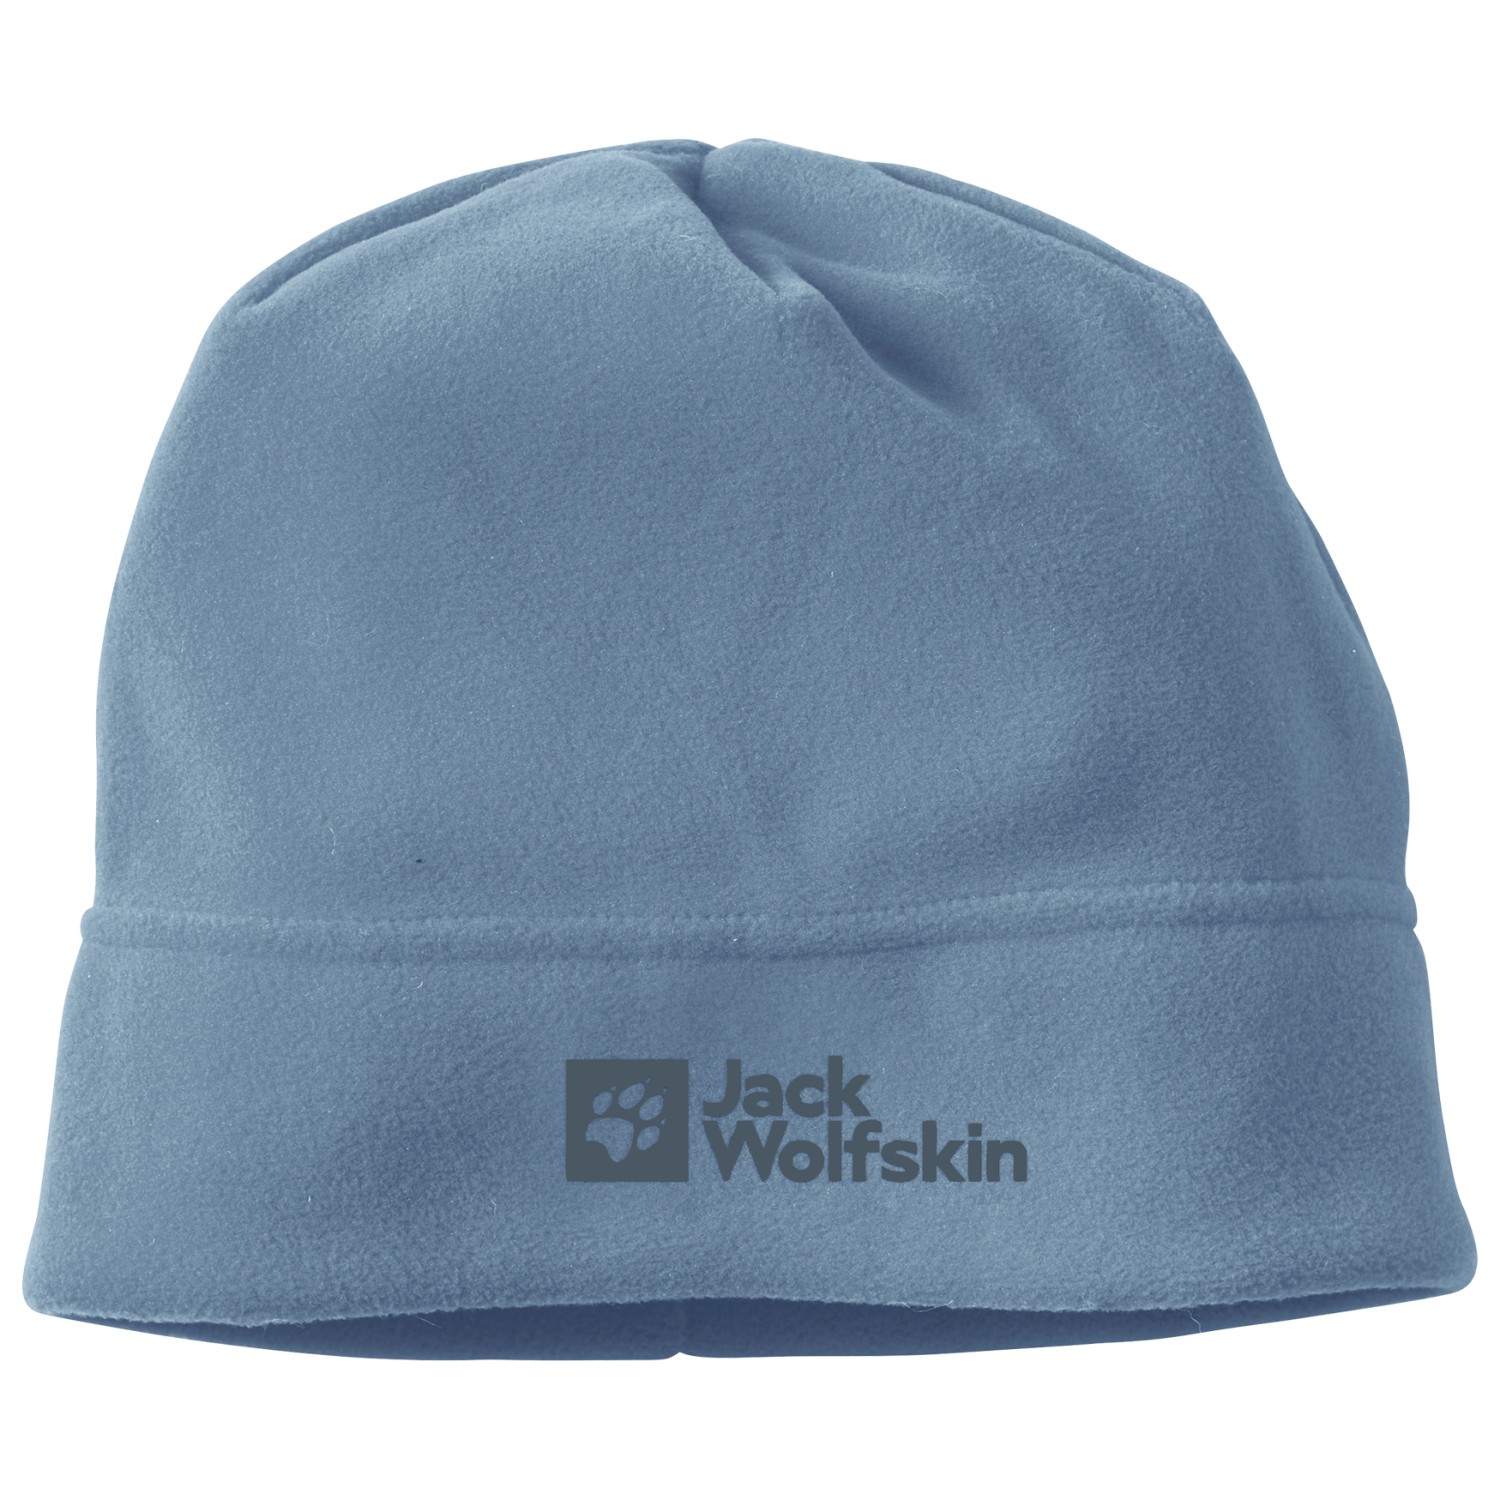 Кепка Jack Wolfskin Real Stuff Beanie, цвет Elemental Blue ангорская шапка зимняя женская вязаная шапка осенняя теплая однотонная лыжная шапка аксессуар для спорта на открытом воздухе